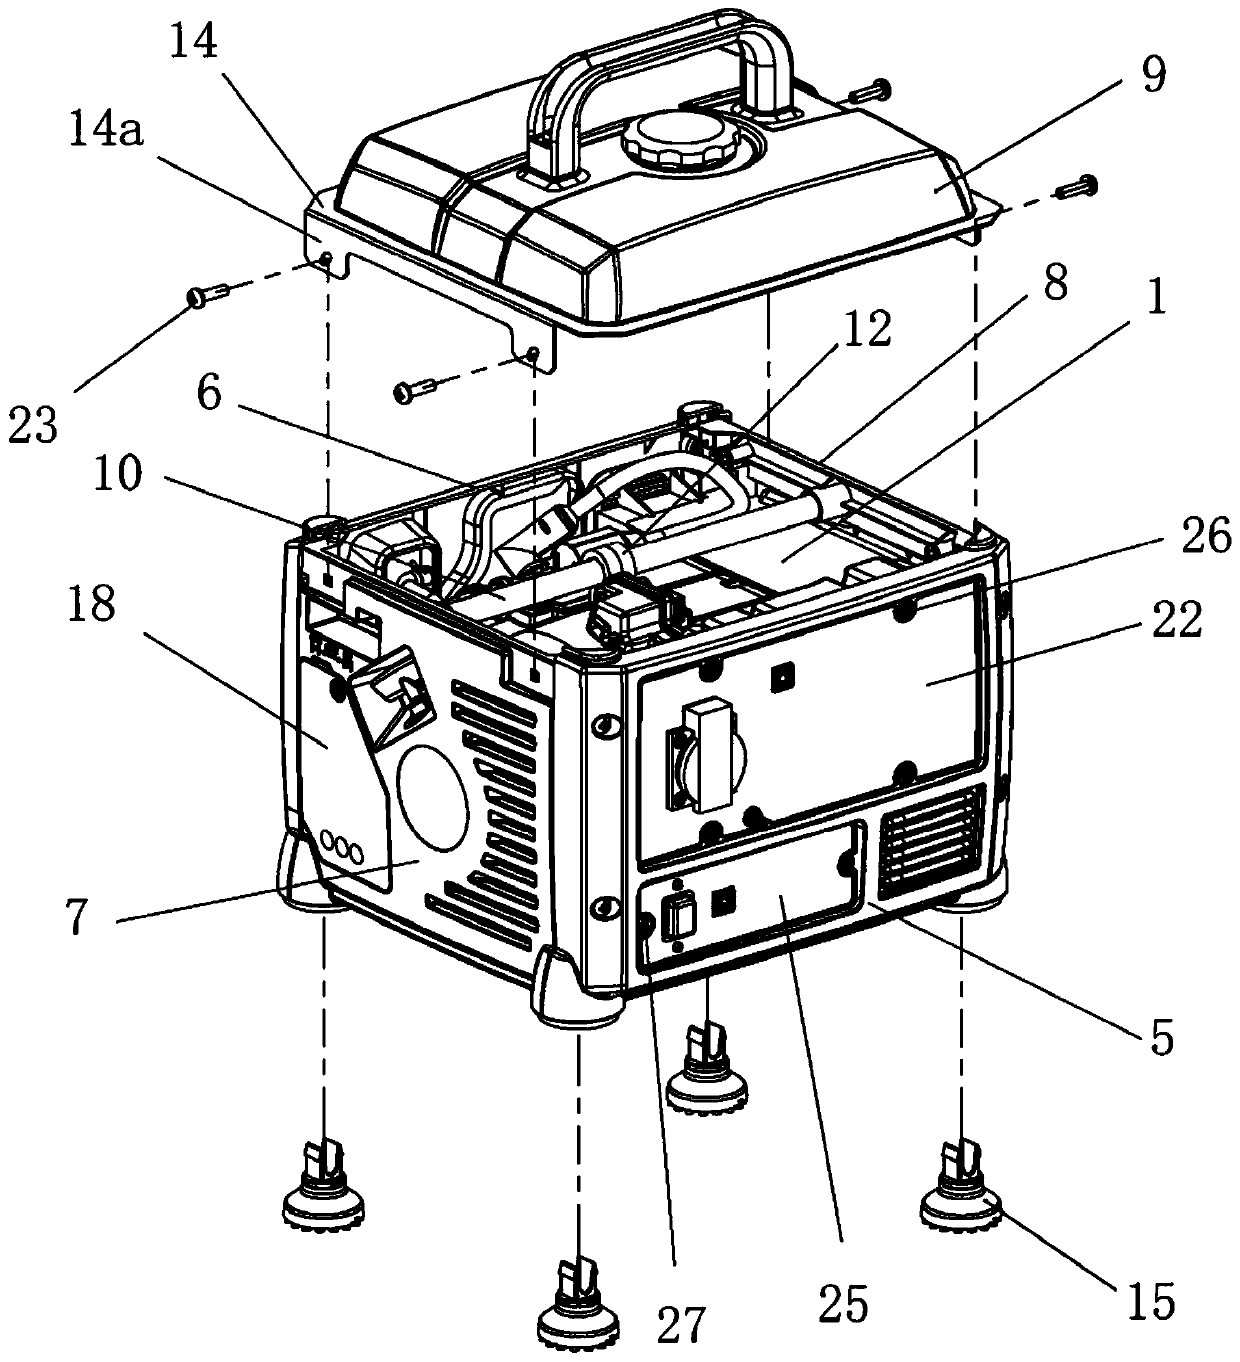 Portable inversion gasoline generator set